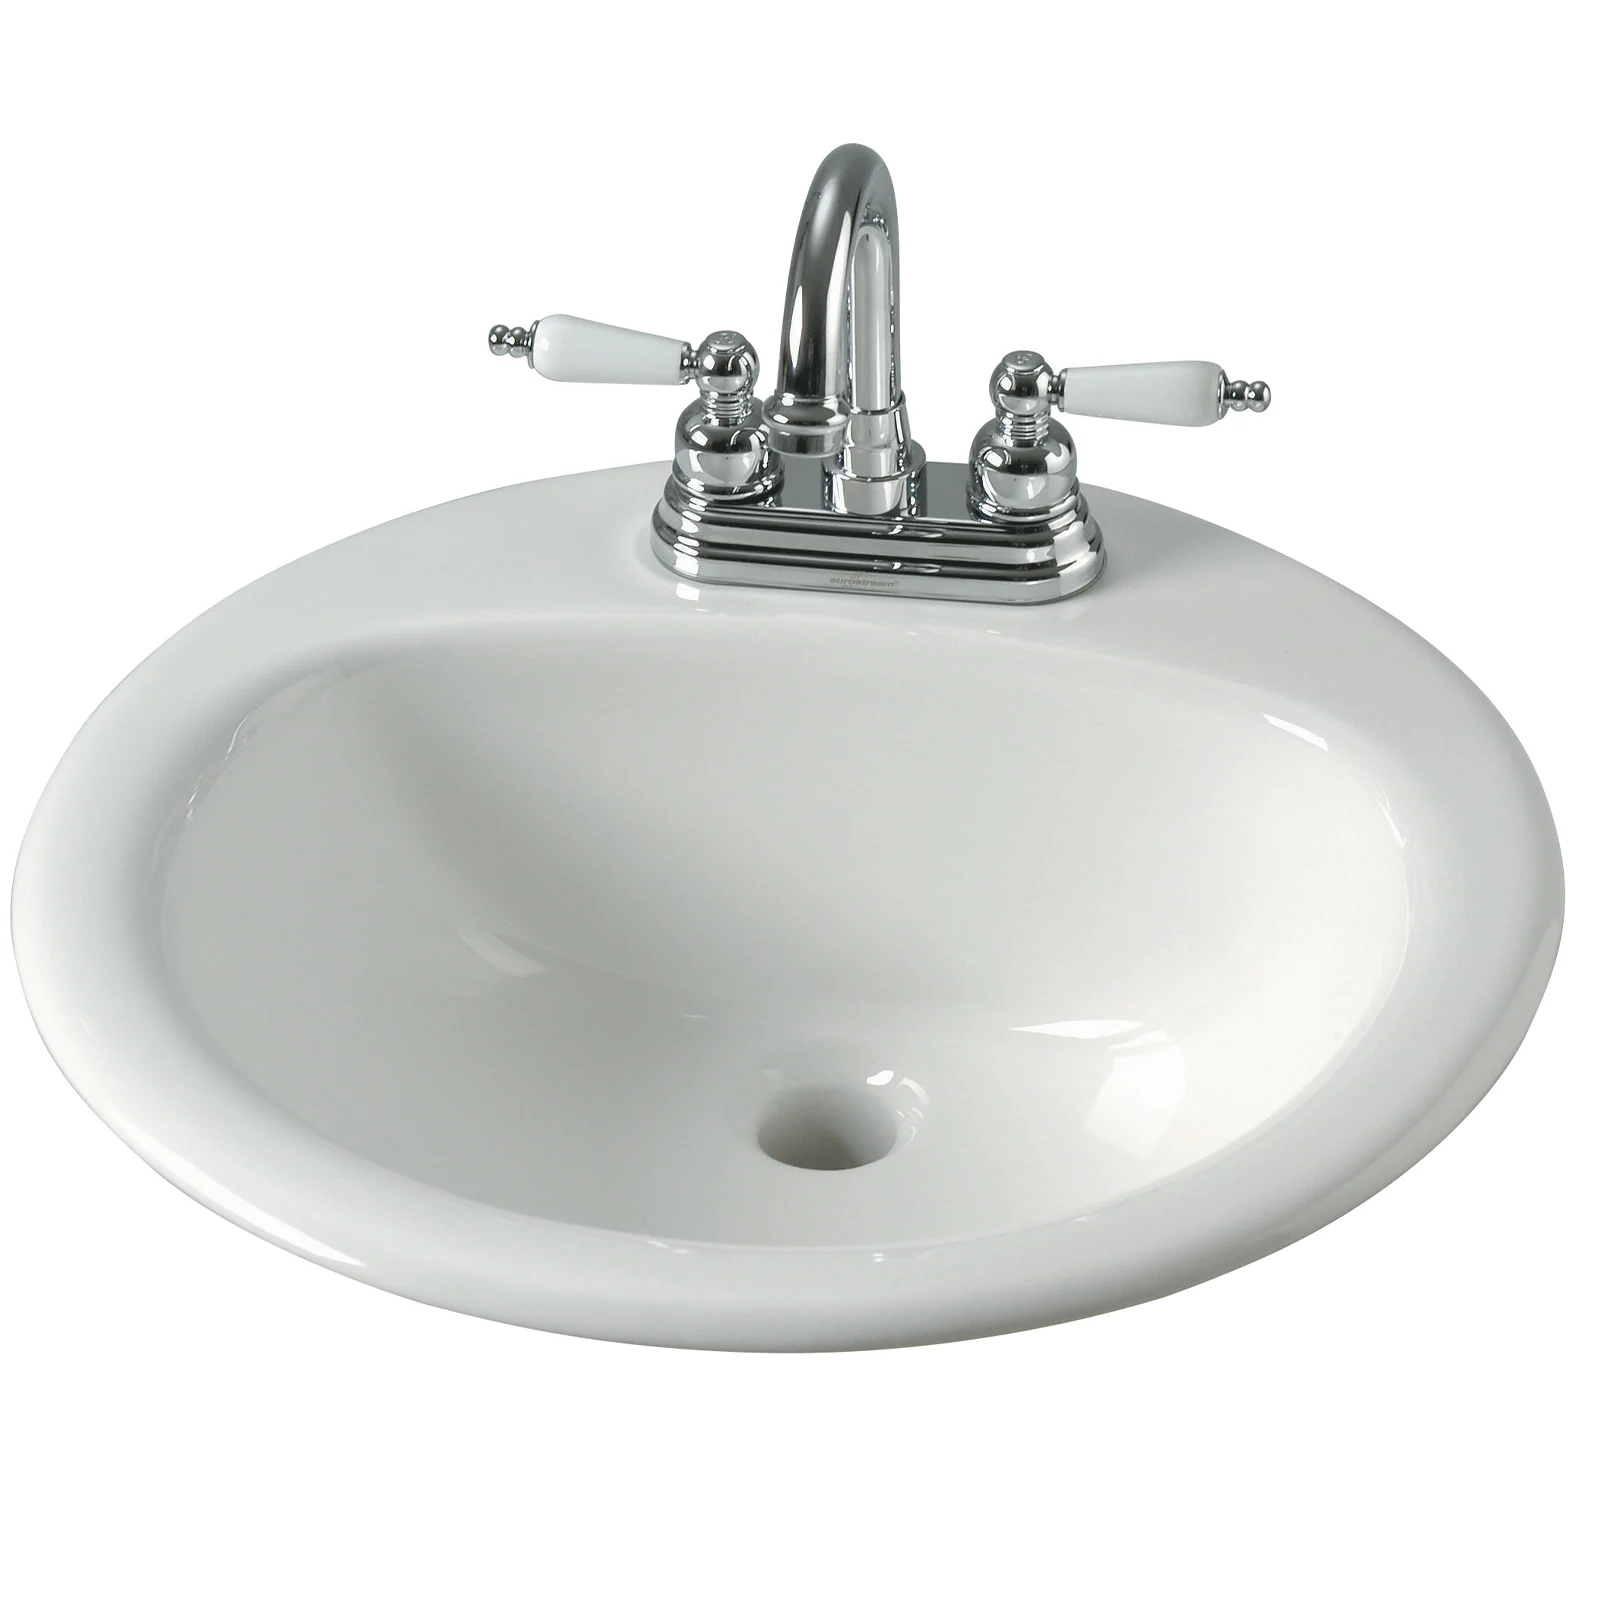 A white drop-in sink 